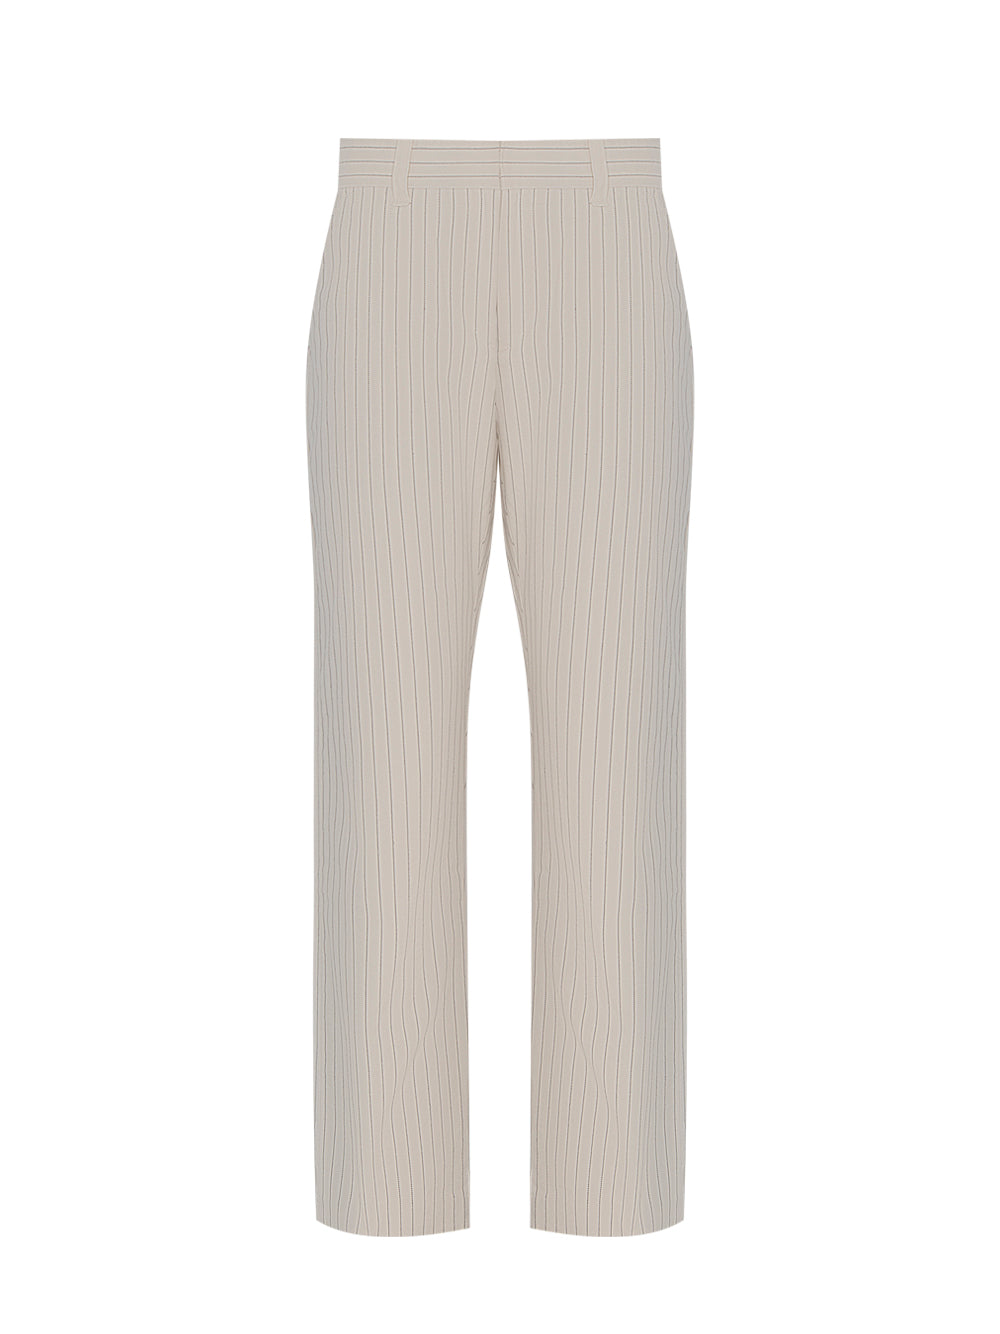 Haydon Cotton Herringbone Pant (White Stripe)